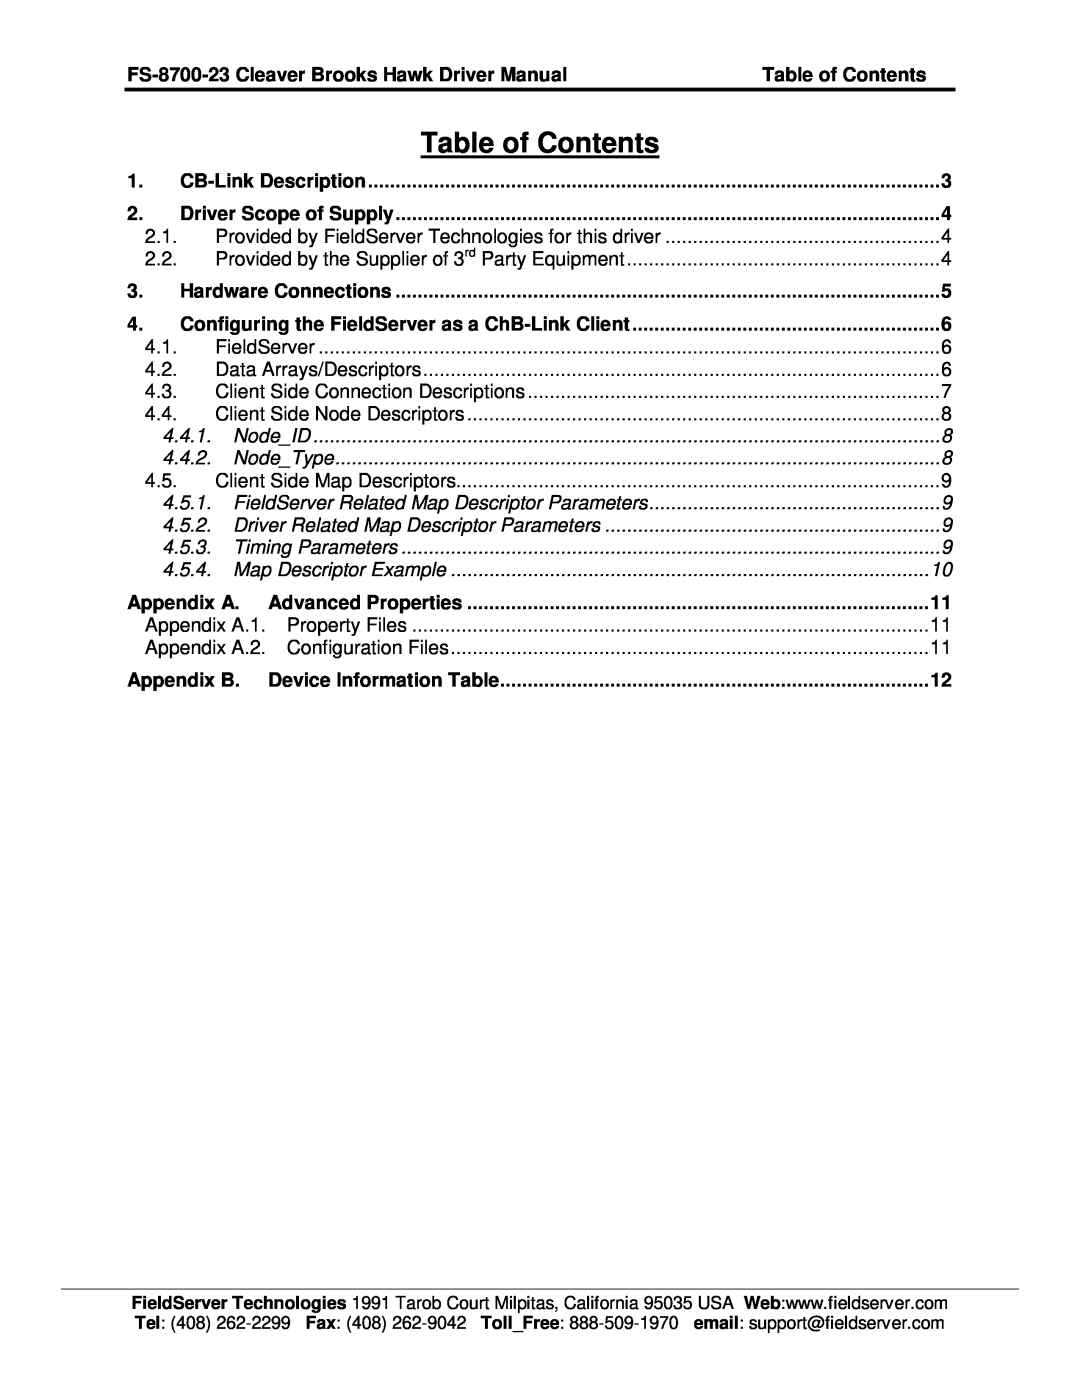 FieldServer Table of Contents, FS-8700-23 Cleaver Brooks Hawk Driver Manual, CB-Link Description, Hardware Connections 